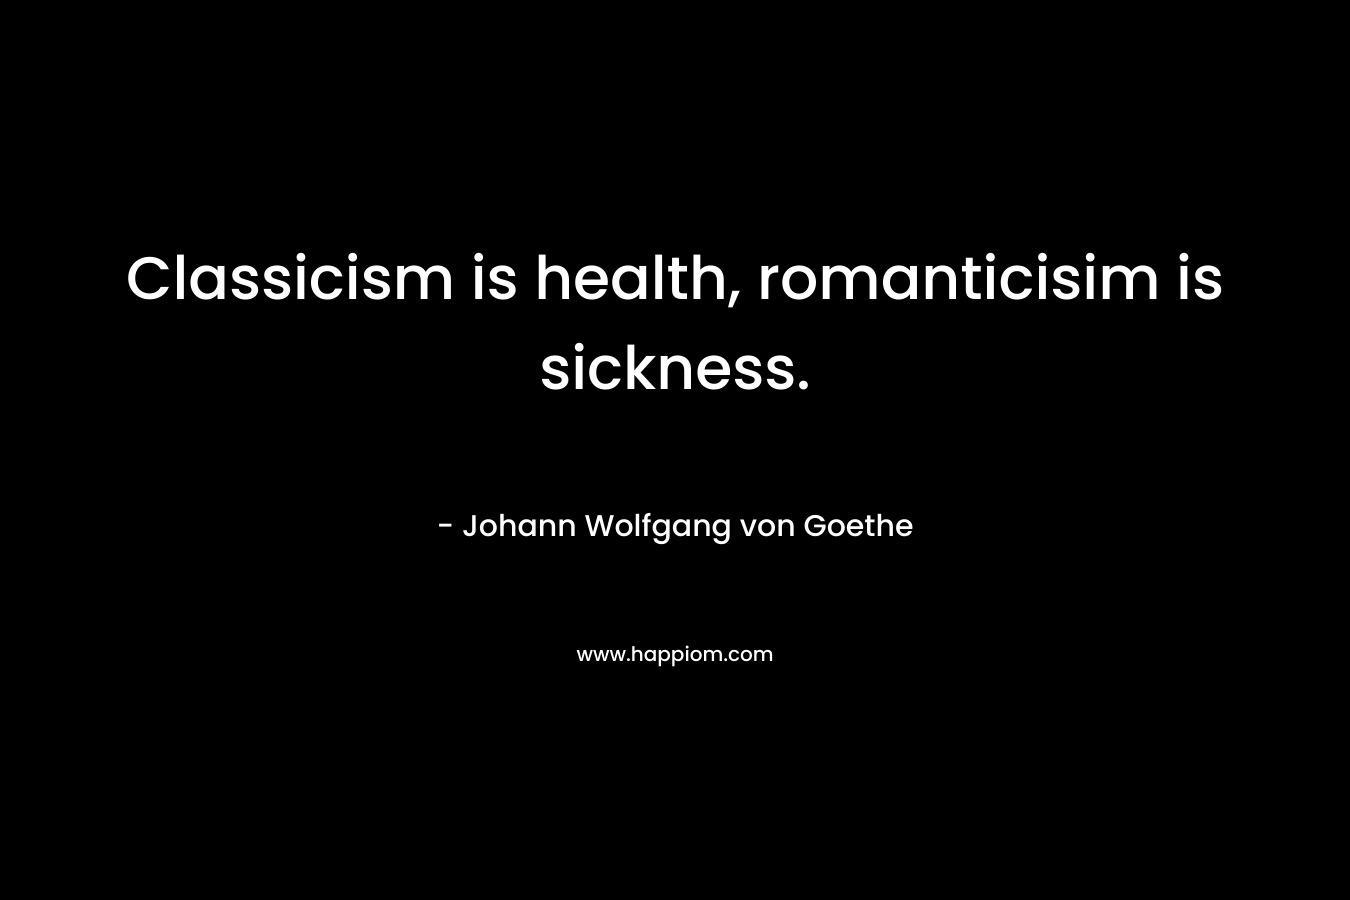 Classicism is health, romanticisim is sickness. – Johann Wolfgang von Goethe